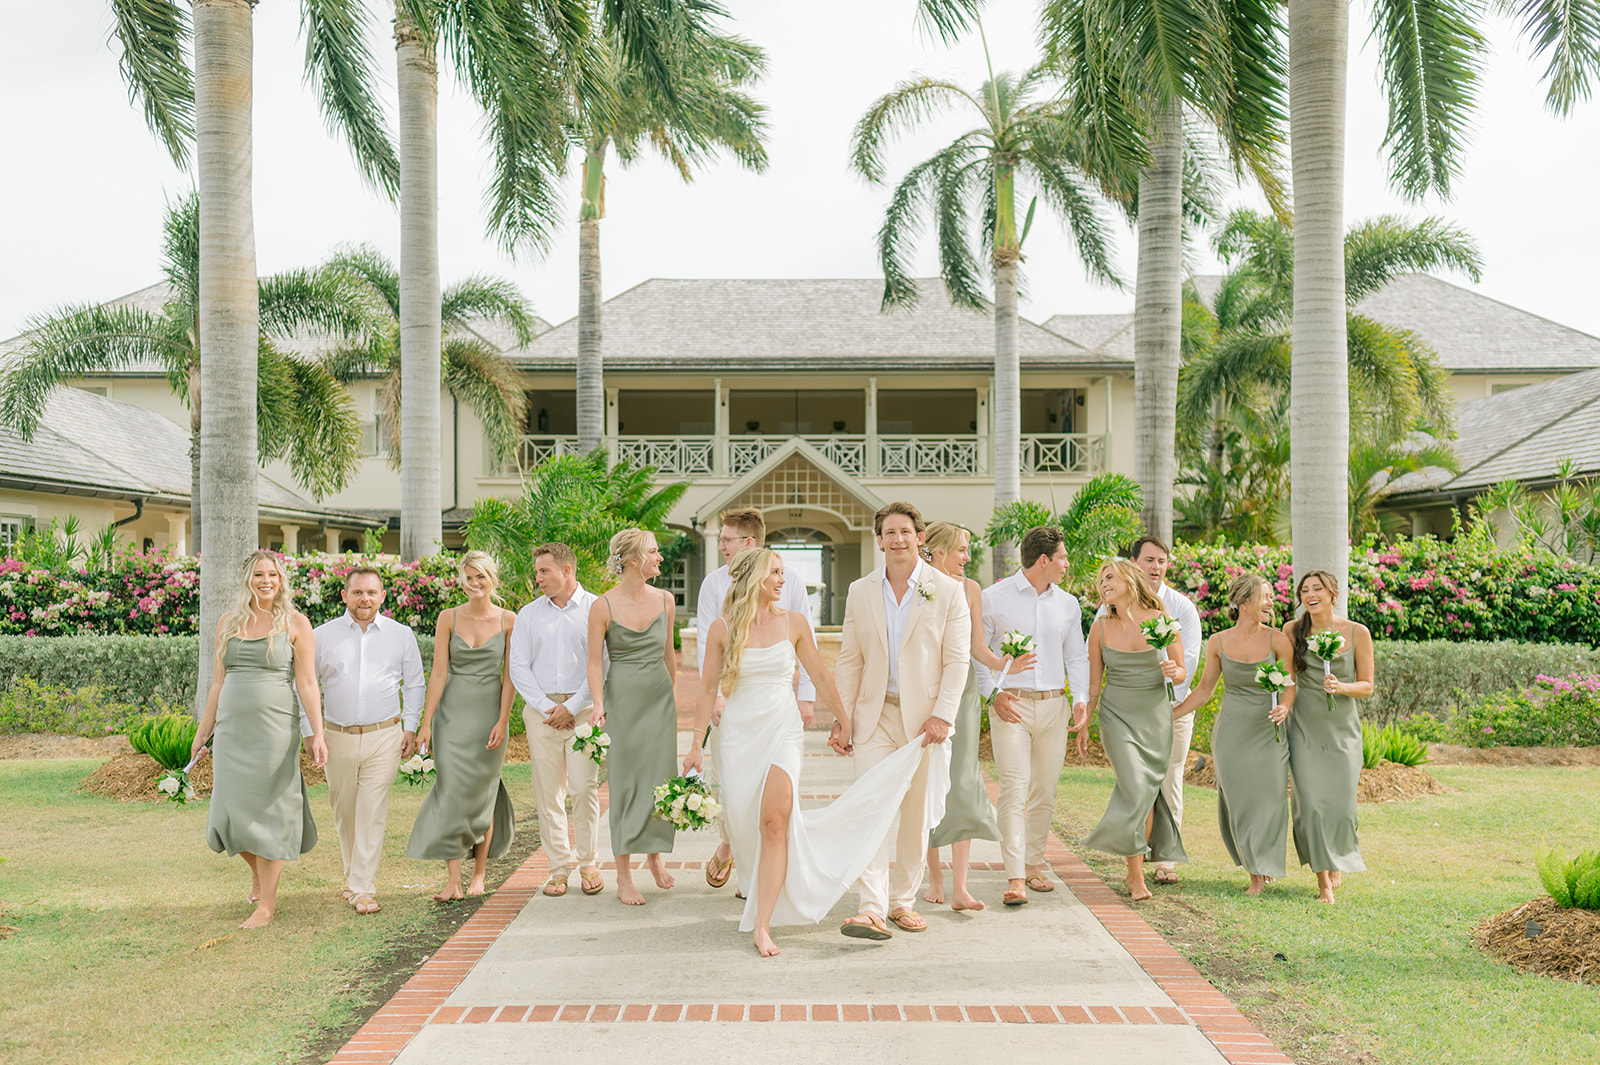 Creative wedding photography with Antigua's tropical flora as the backdrop
